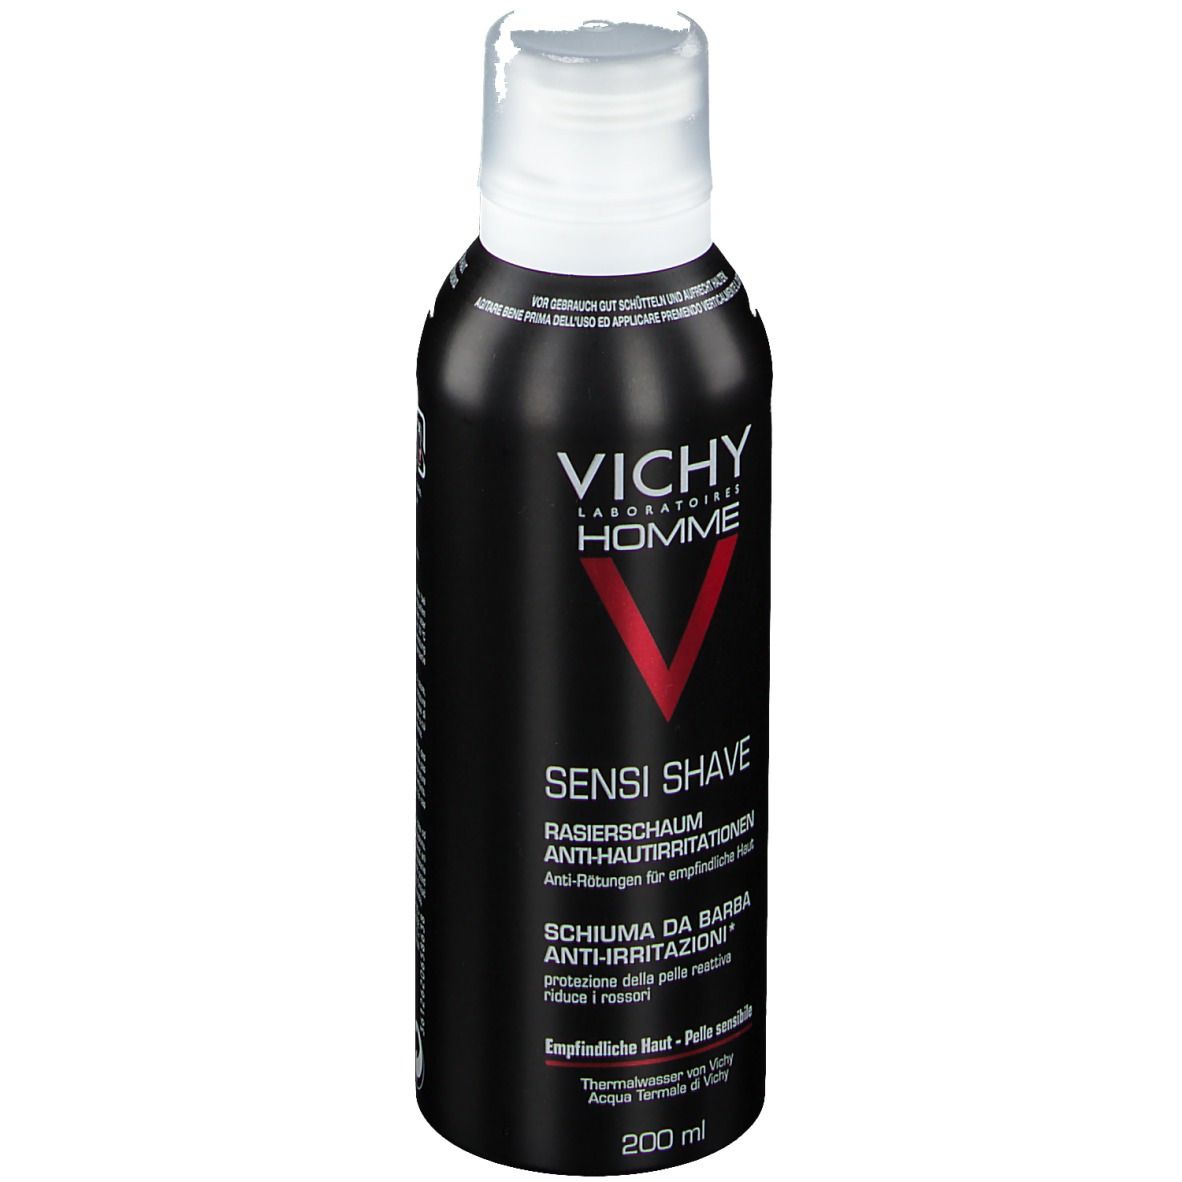 Vichy Gel-Mousse da Barba